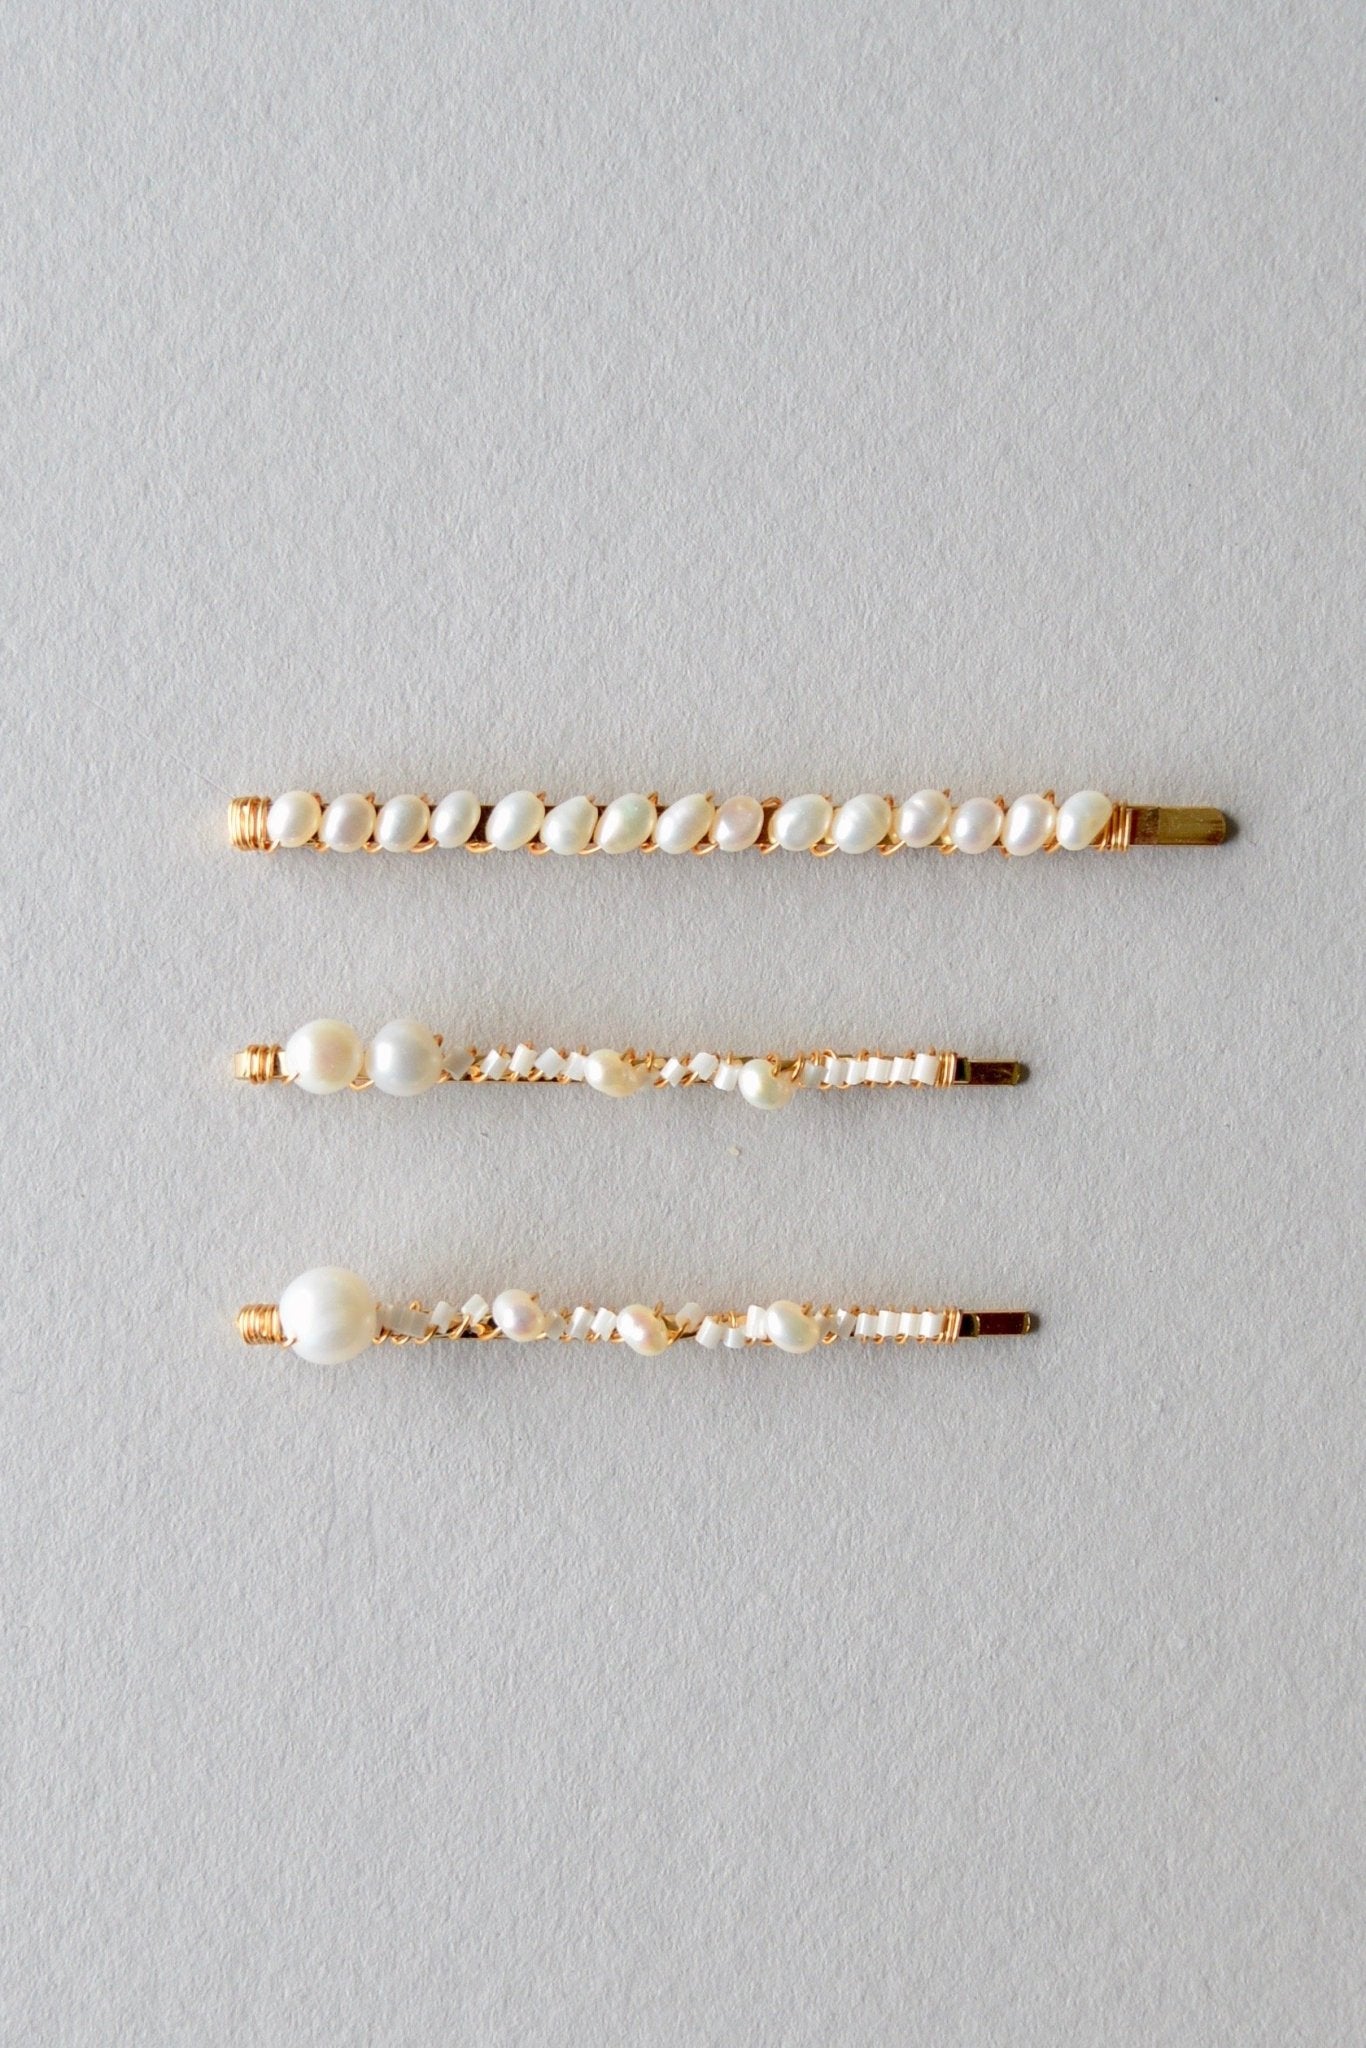 Natural Pearls: Perlen Haarspange Lovis | Farbe gold